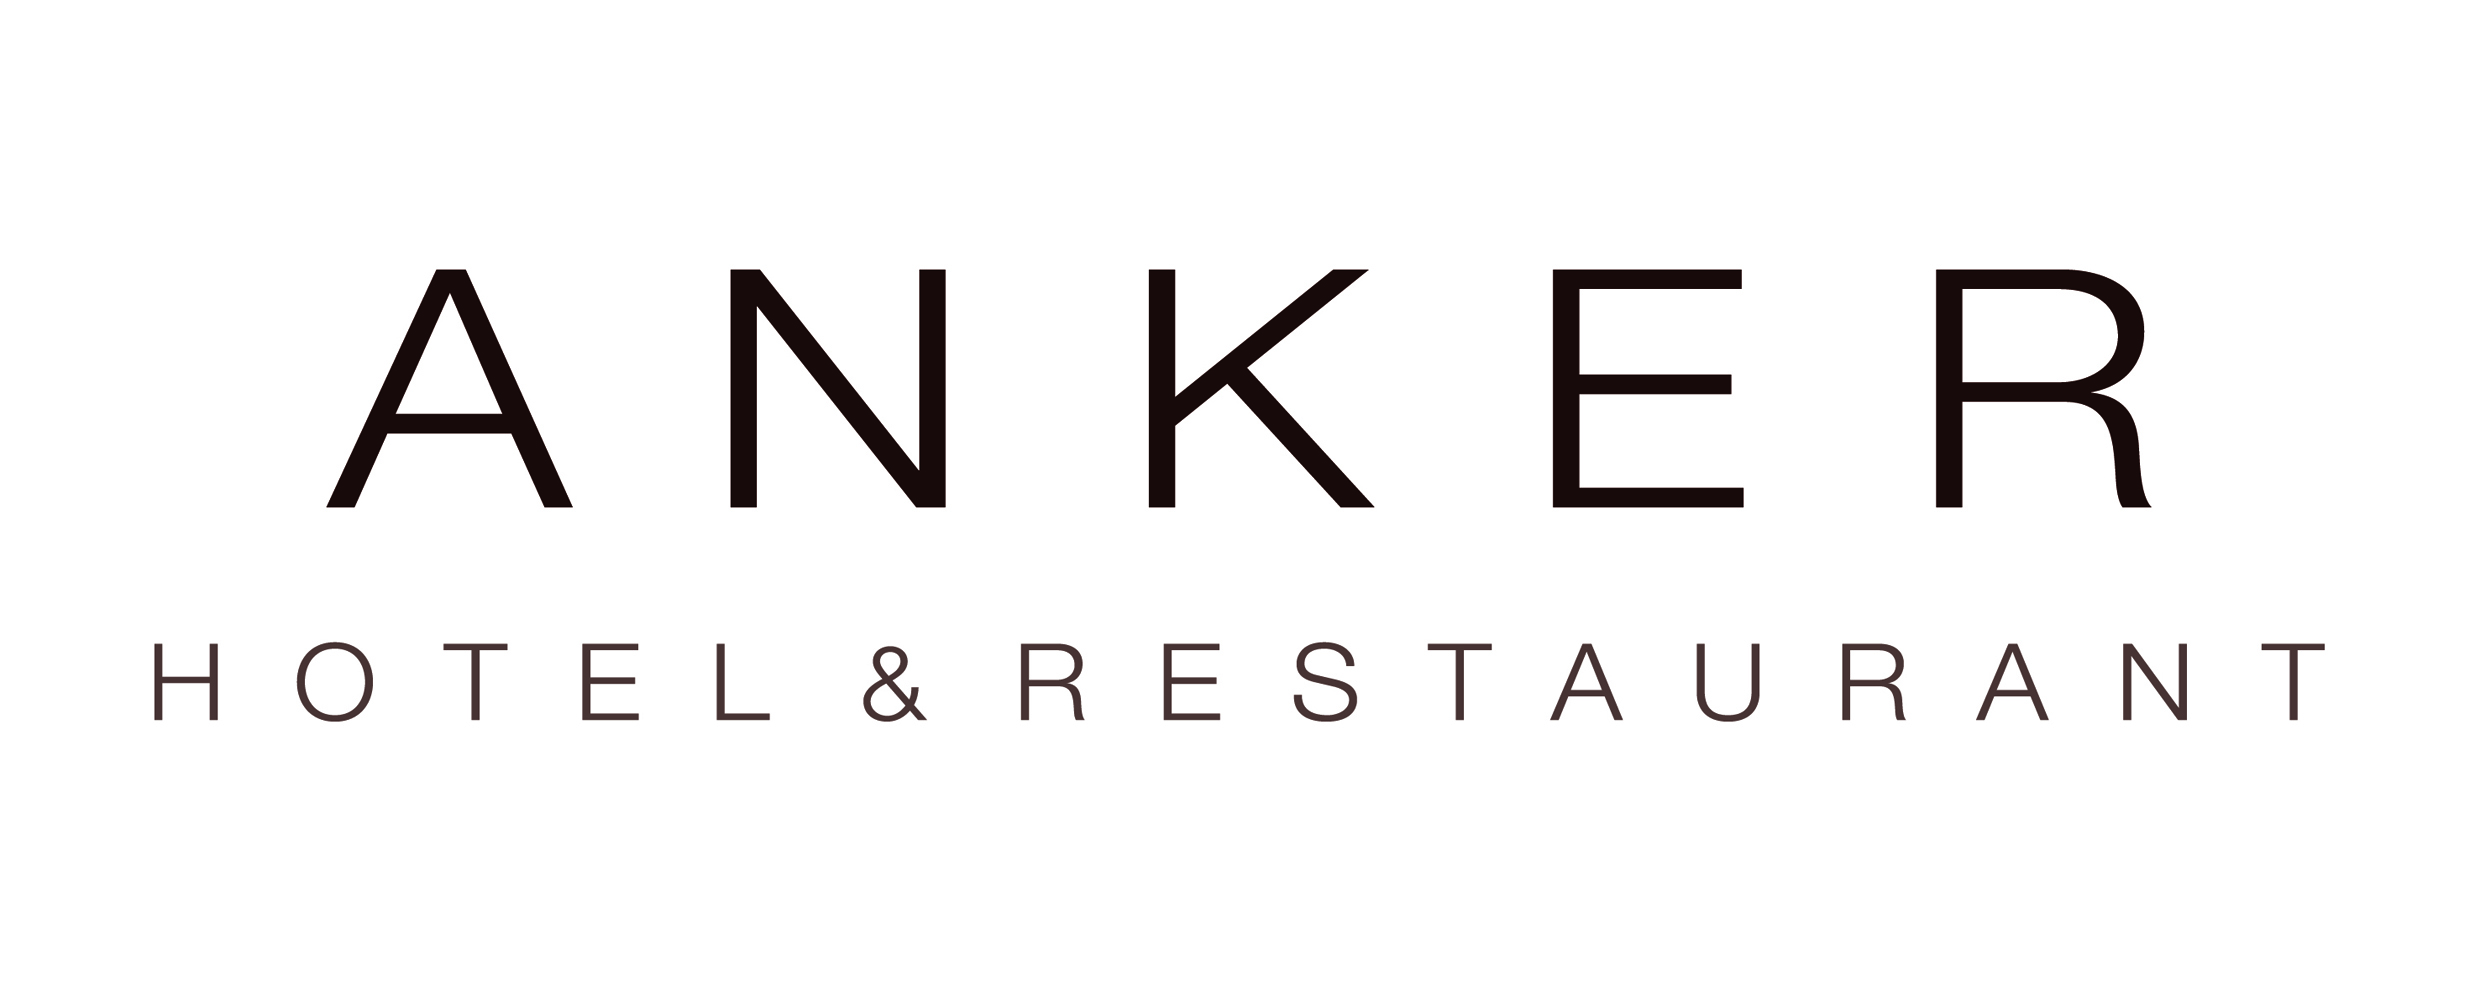 Anker Hotel Restaurant GmbH